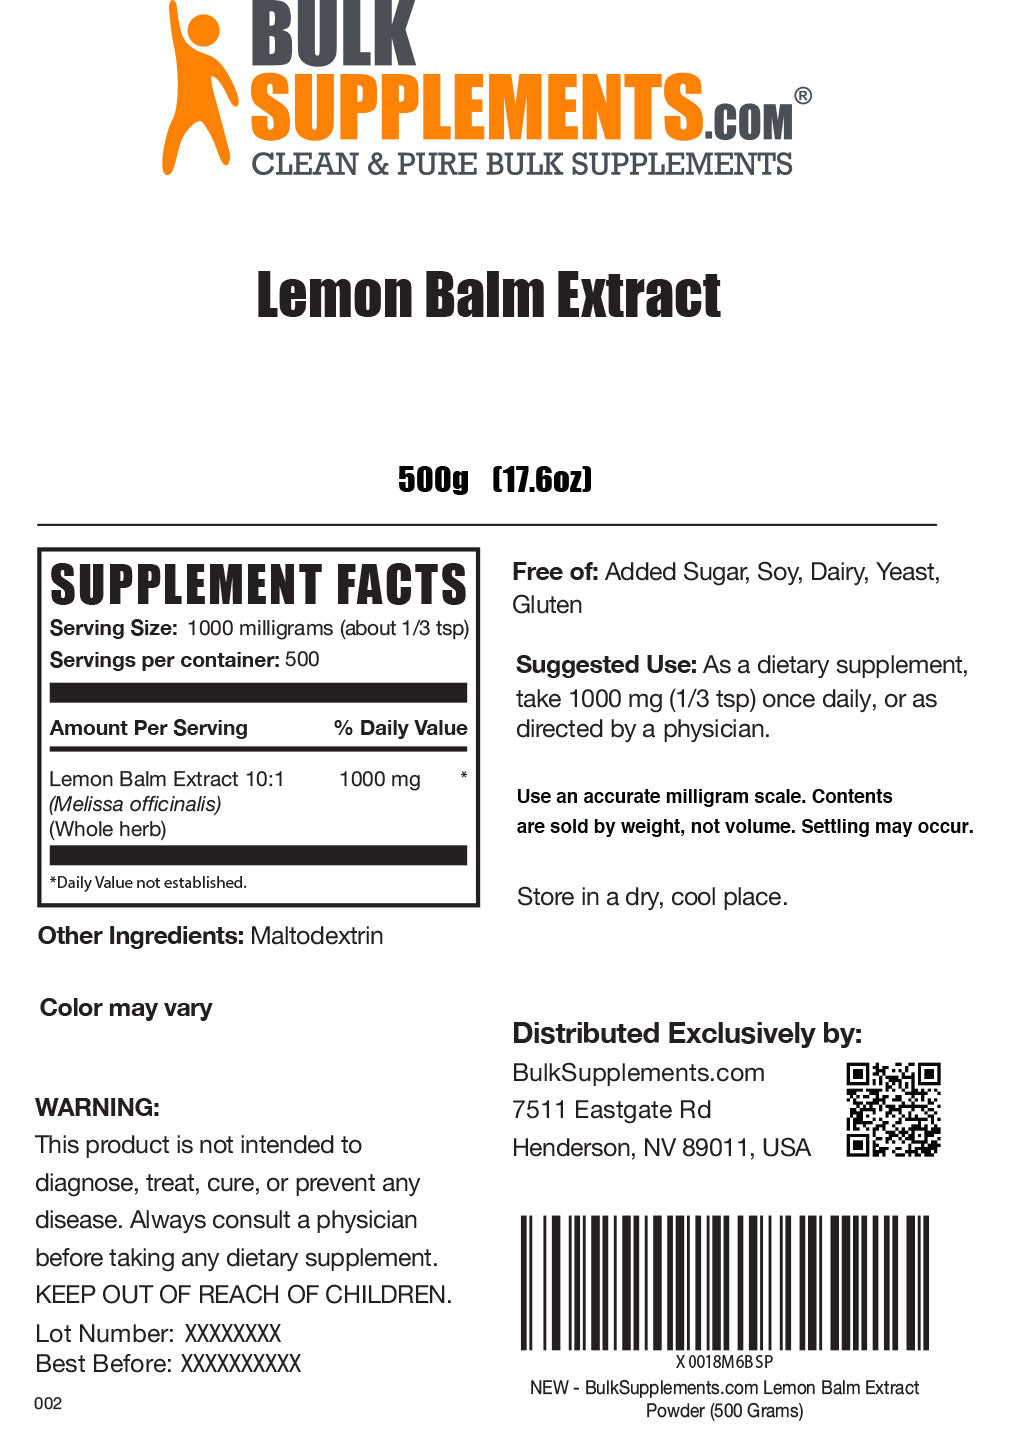 Lemon Balm Extract Label 500g